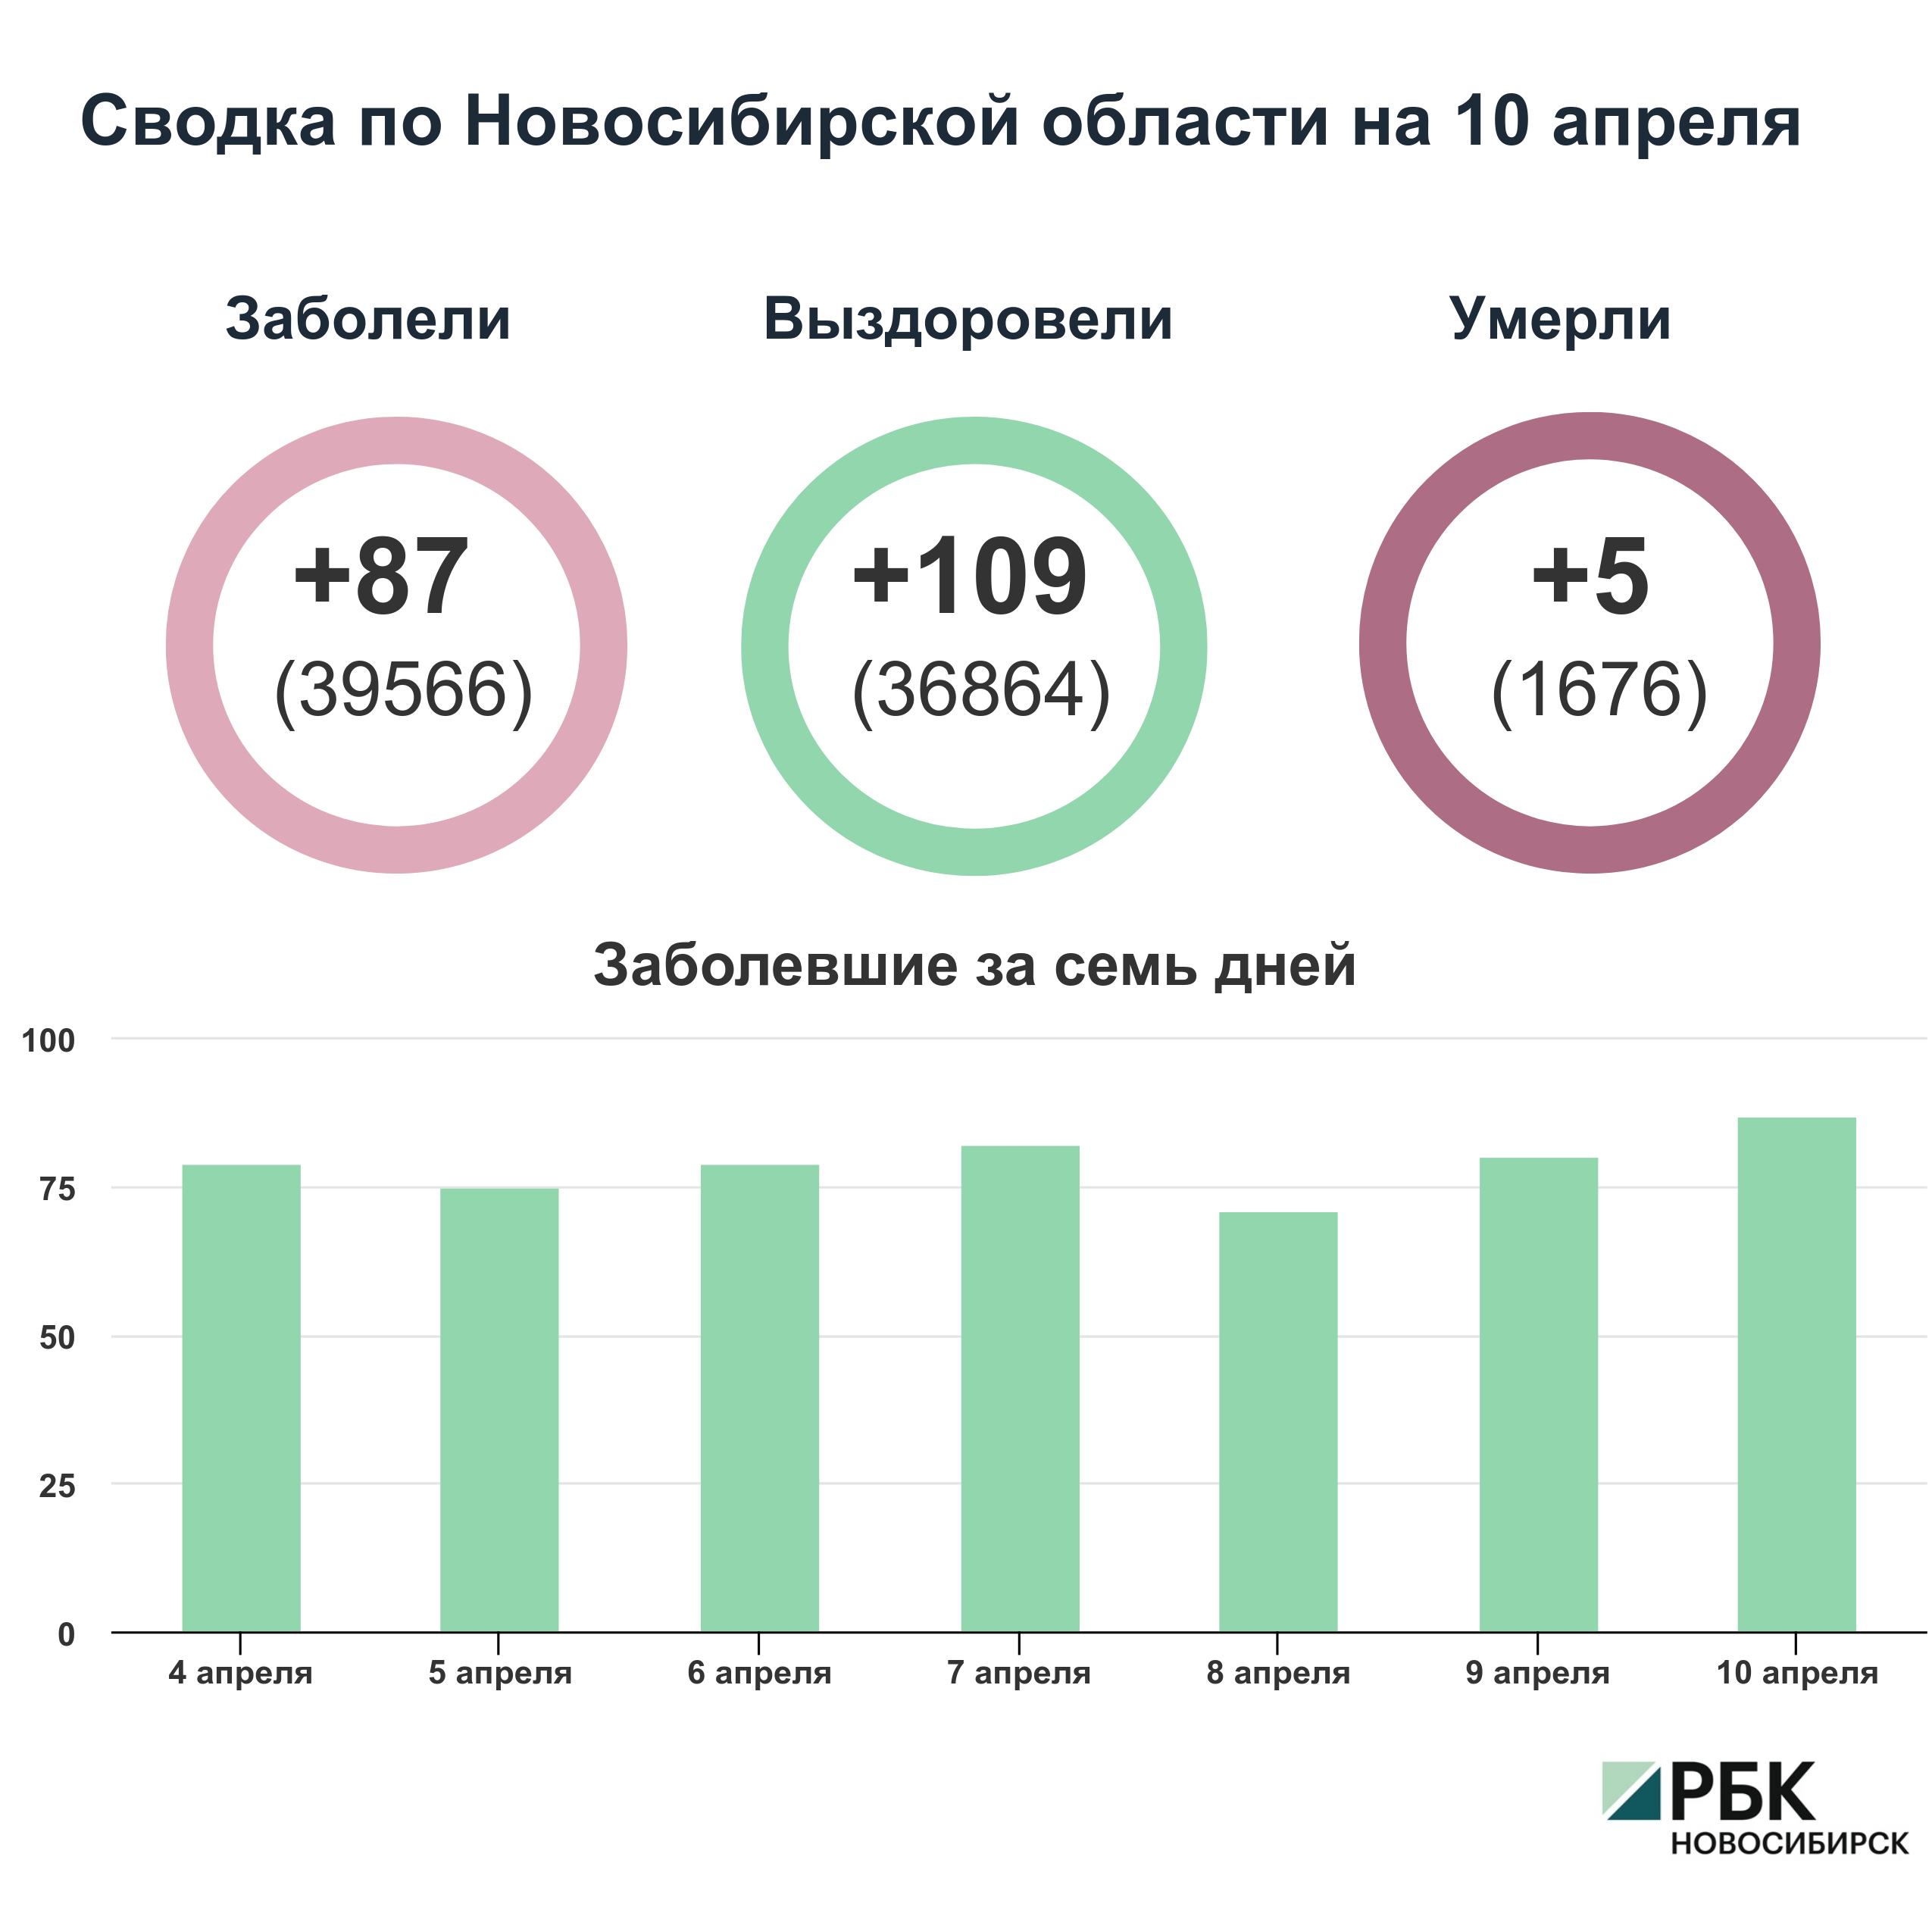 Коронавирус в Новосибирске: сводка на 10 апреля